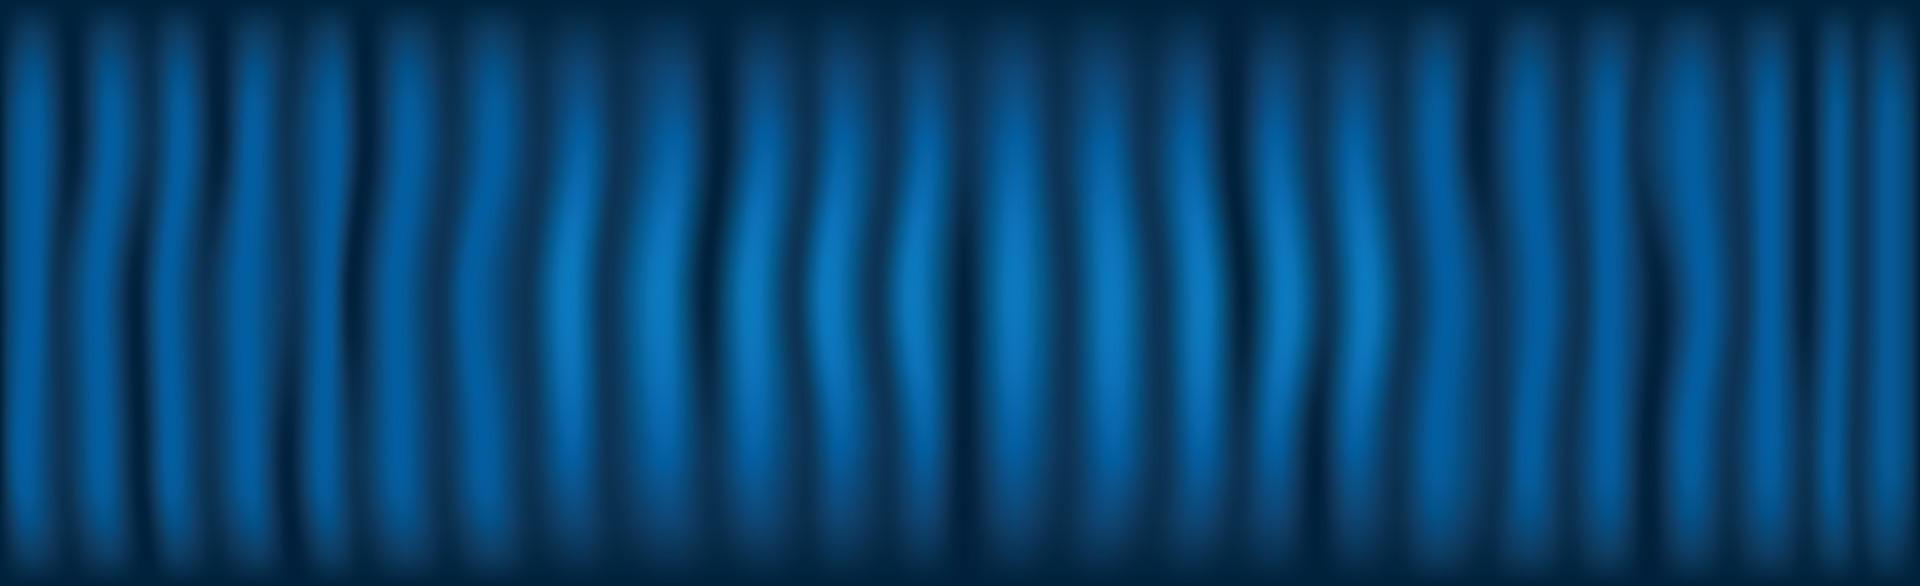 cortina de teatro azul, modelo de fundo panorâmico - vector